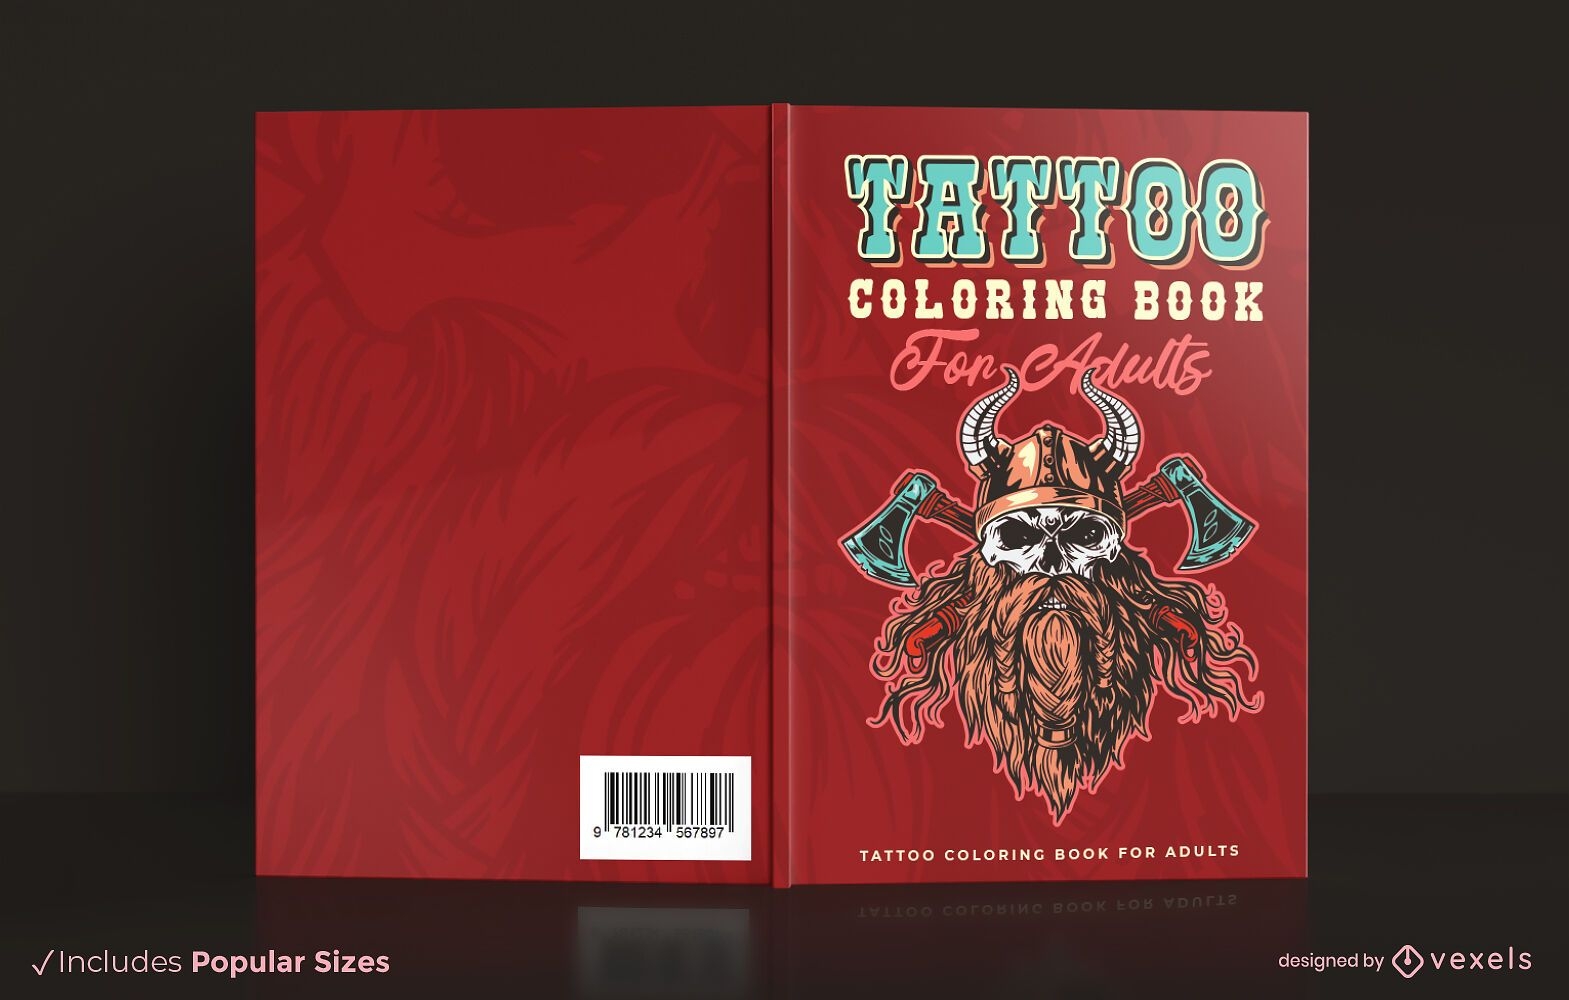 Descarga Vector De Diseño De Portada De Libro Para Colorear De Tatuaje